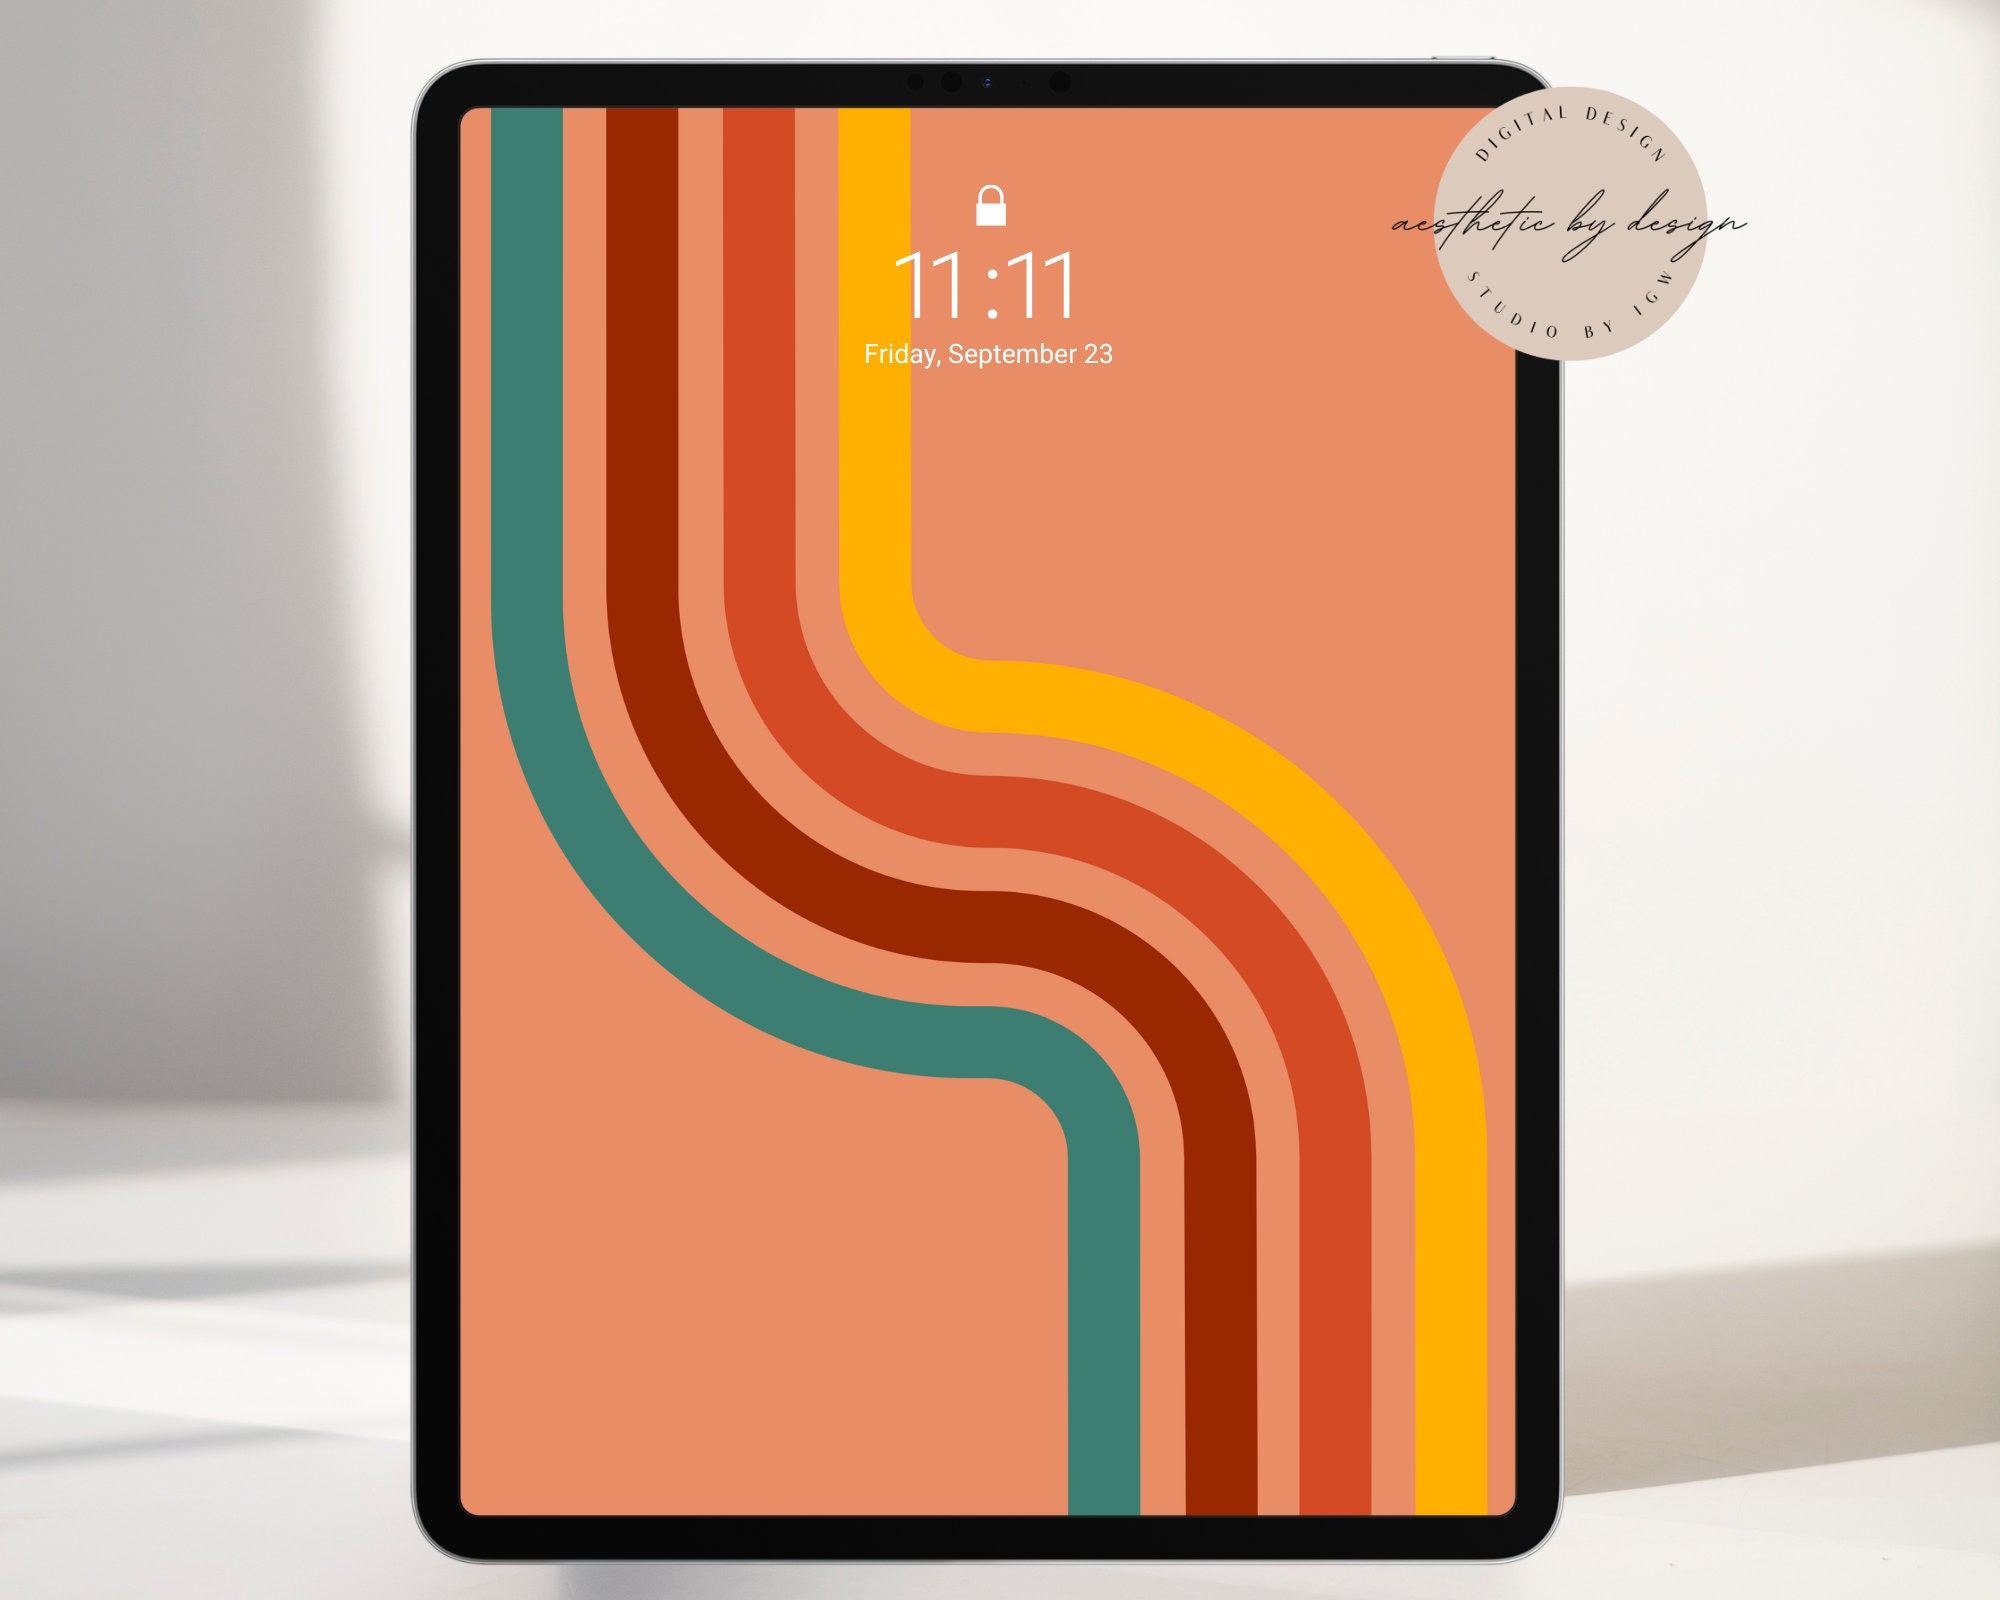 Top 999+ Aesthetic Ipad Wallpaper Full HD, 4K✓Free to Use